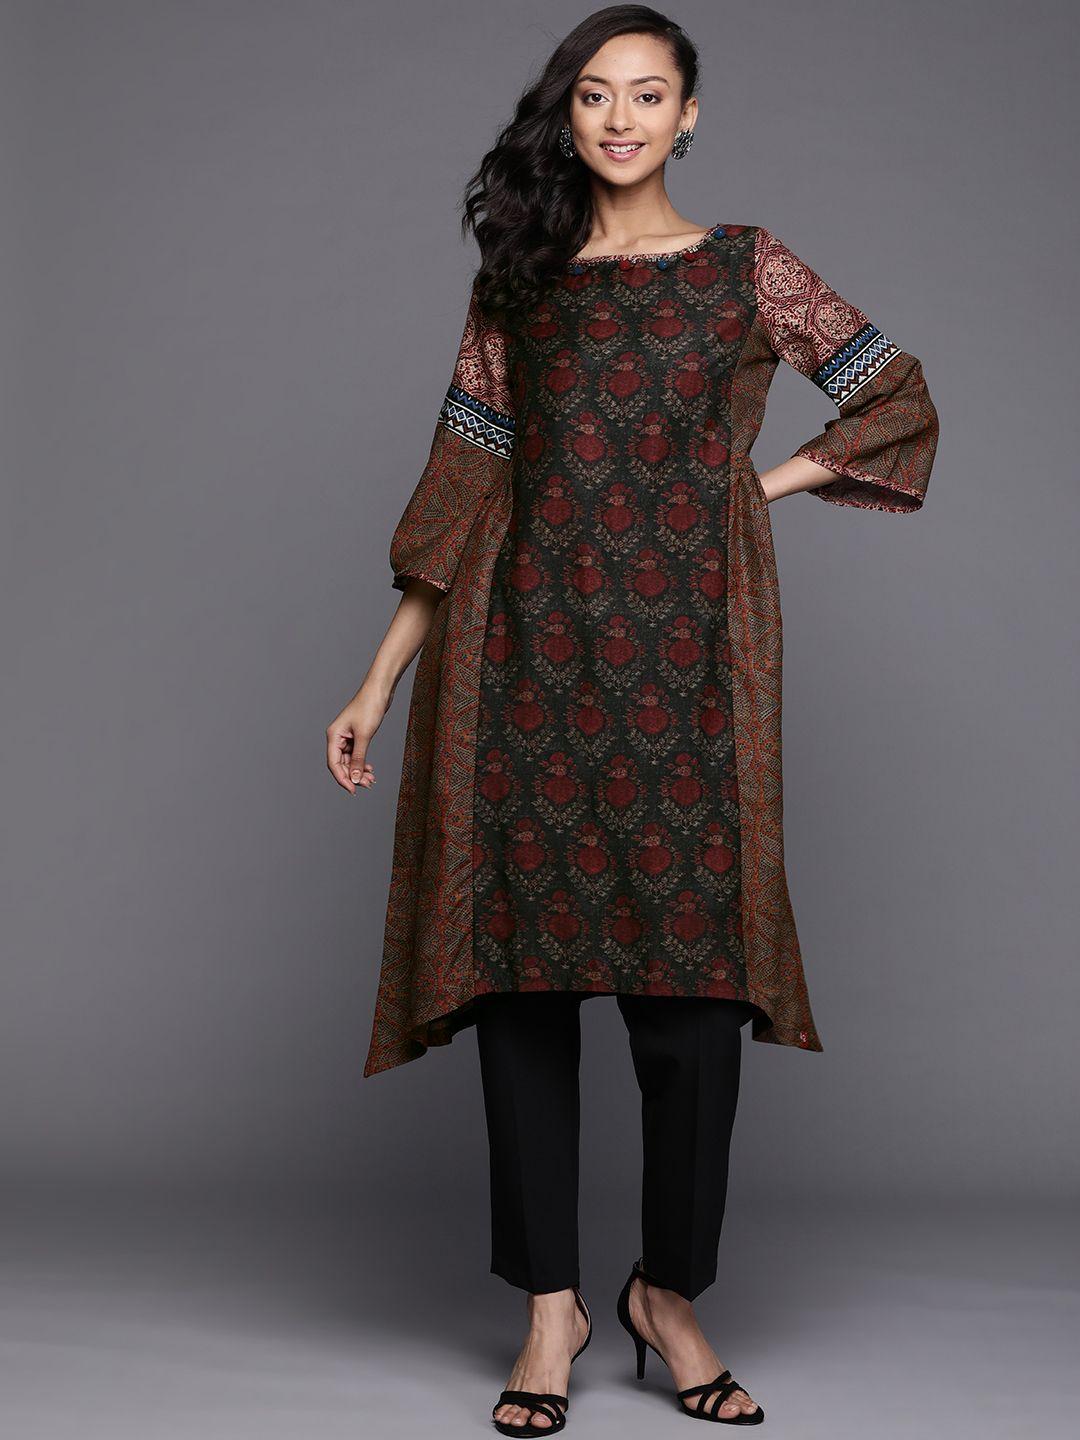 biba women charcoal grey & maroon ethnic motifs printed asymmetric bell sleeves kurta